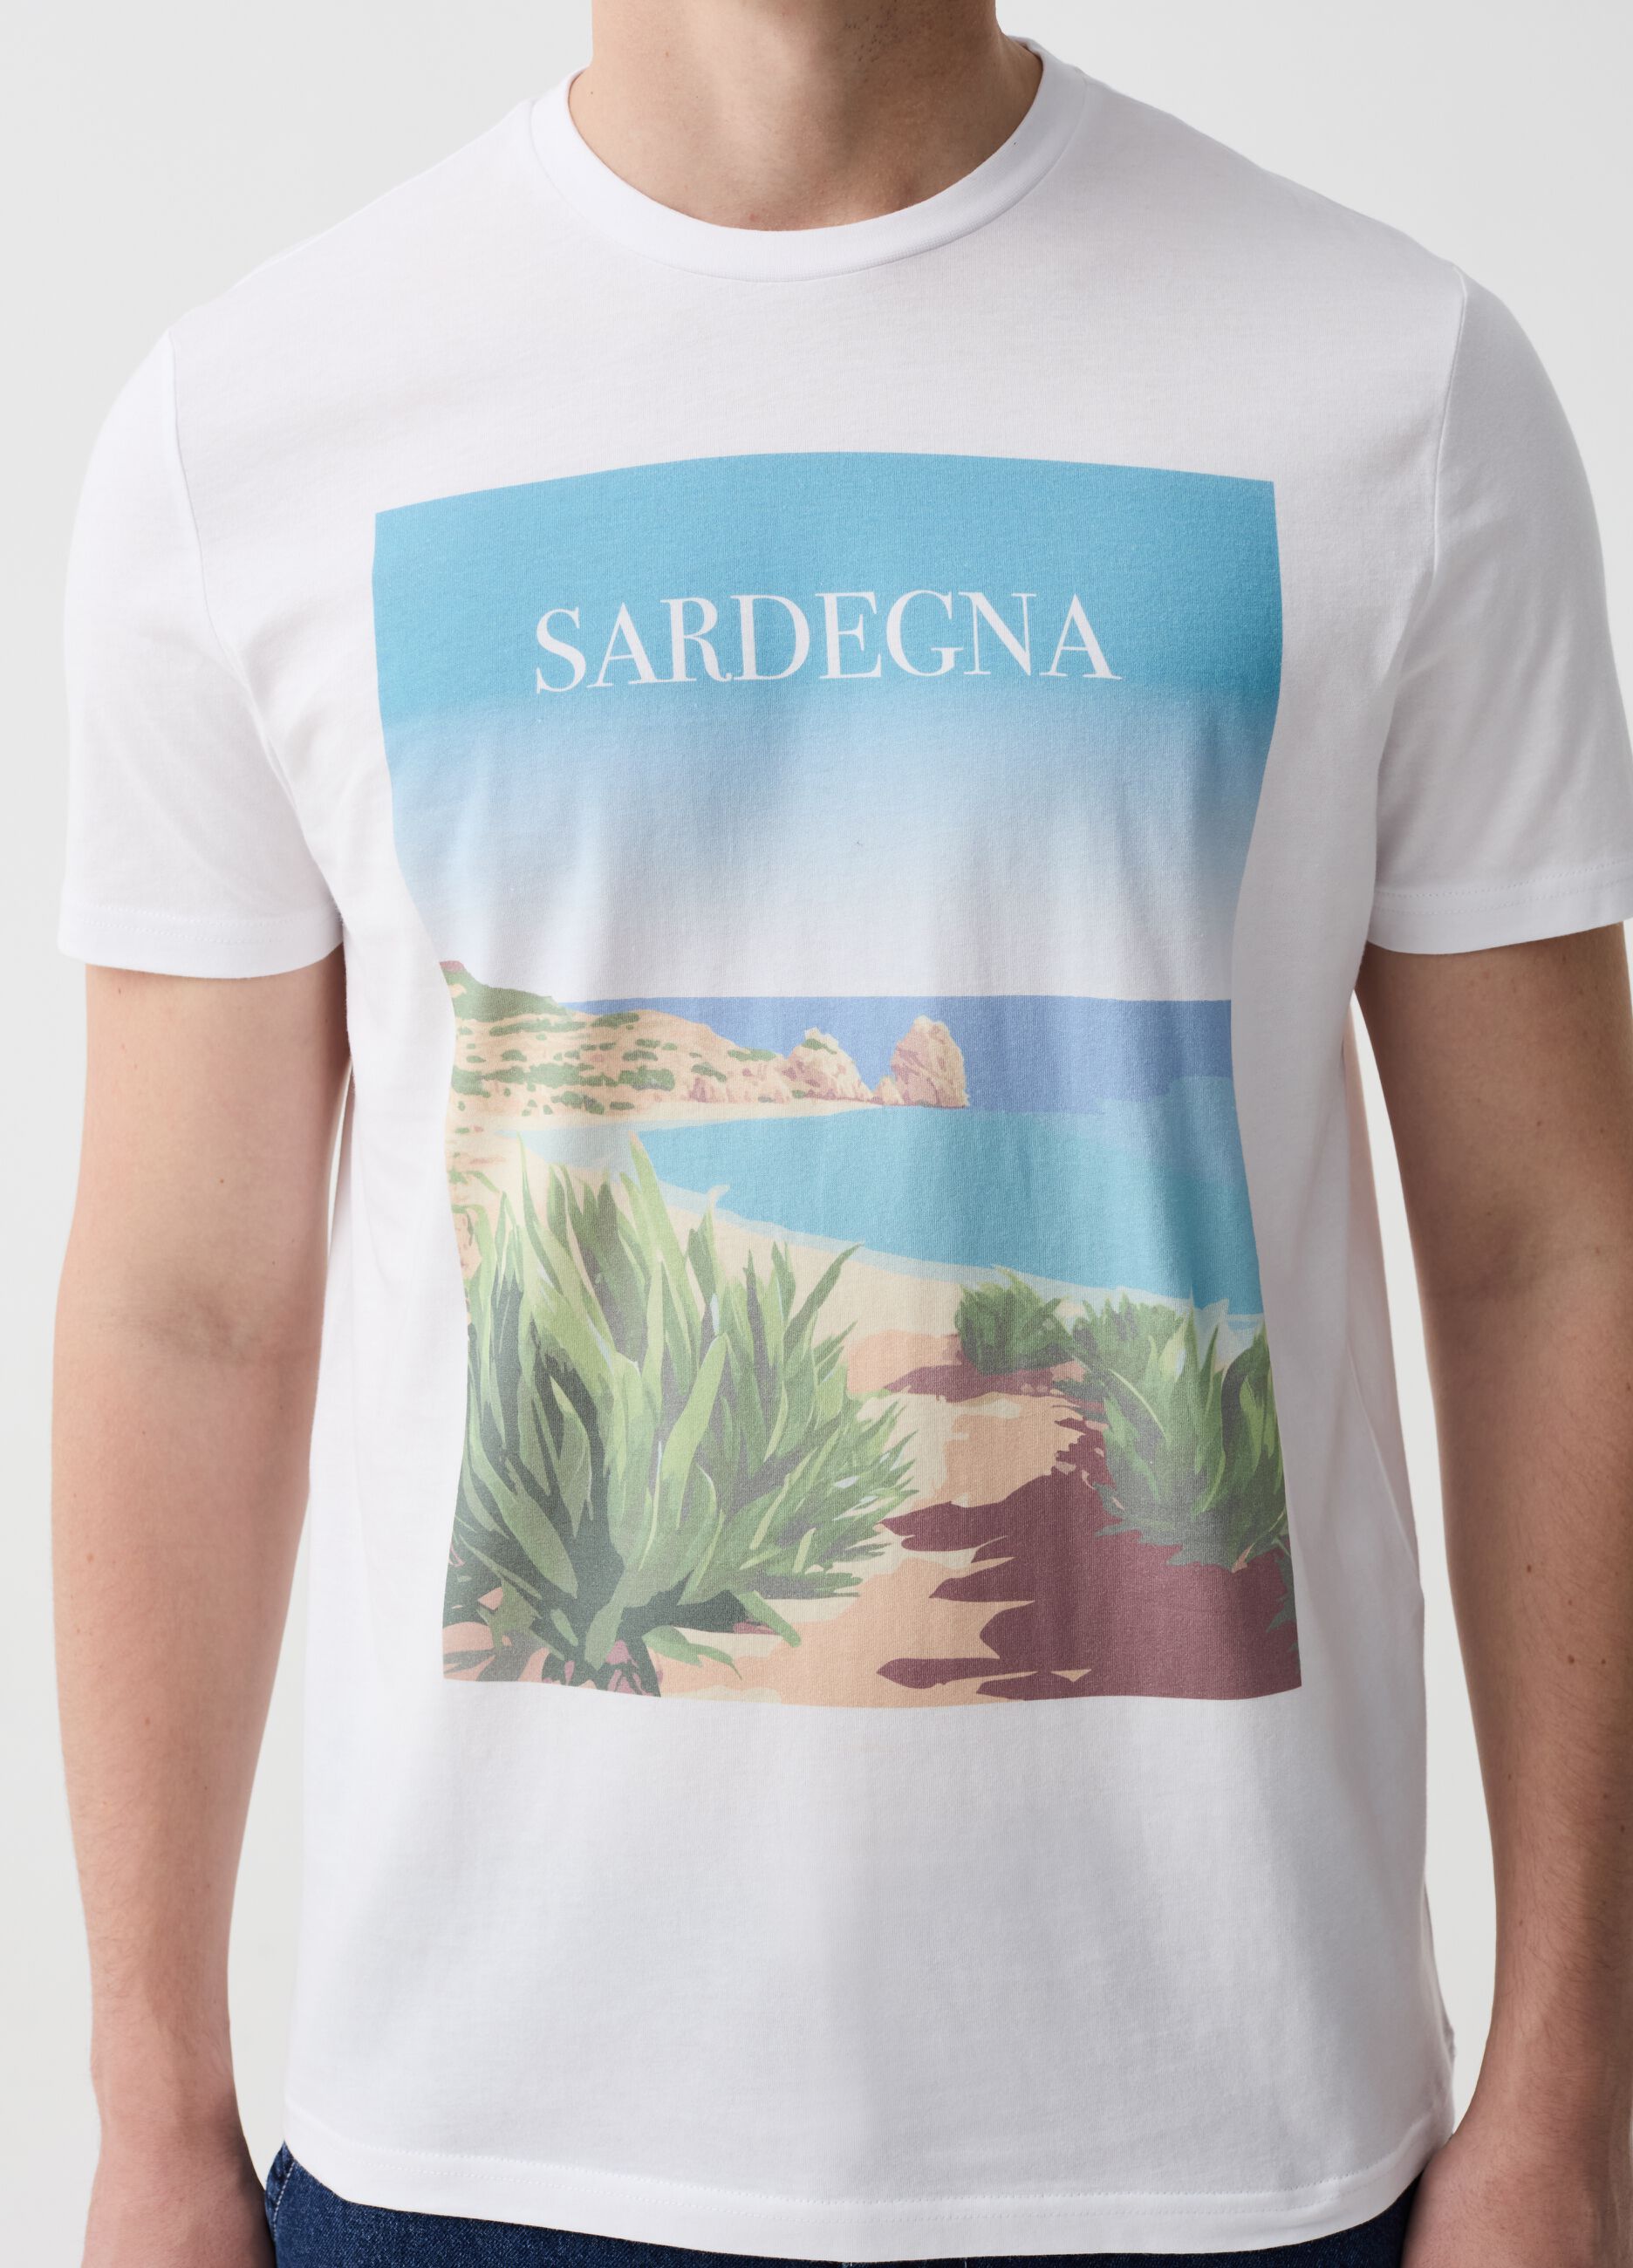 Cotton T-shirt with Sardinia print